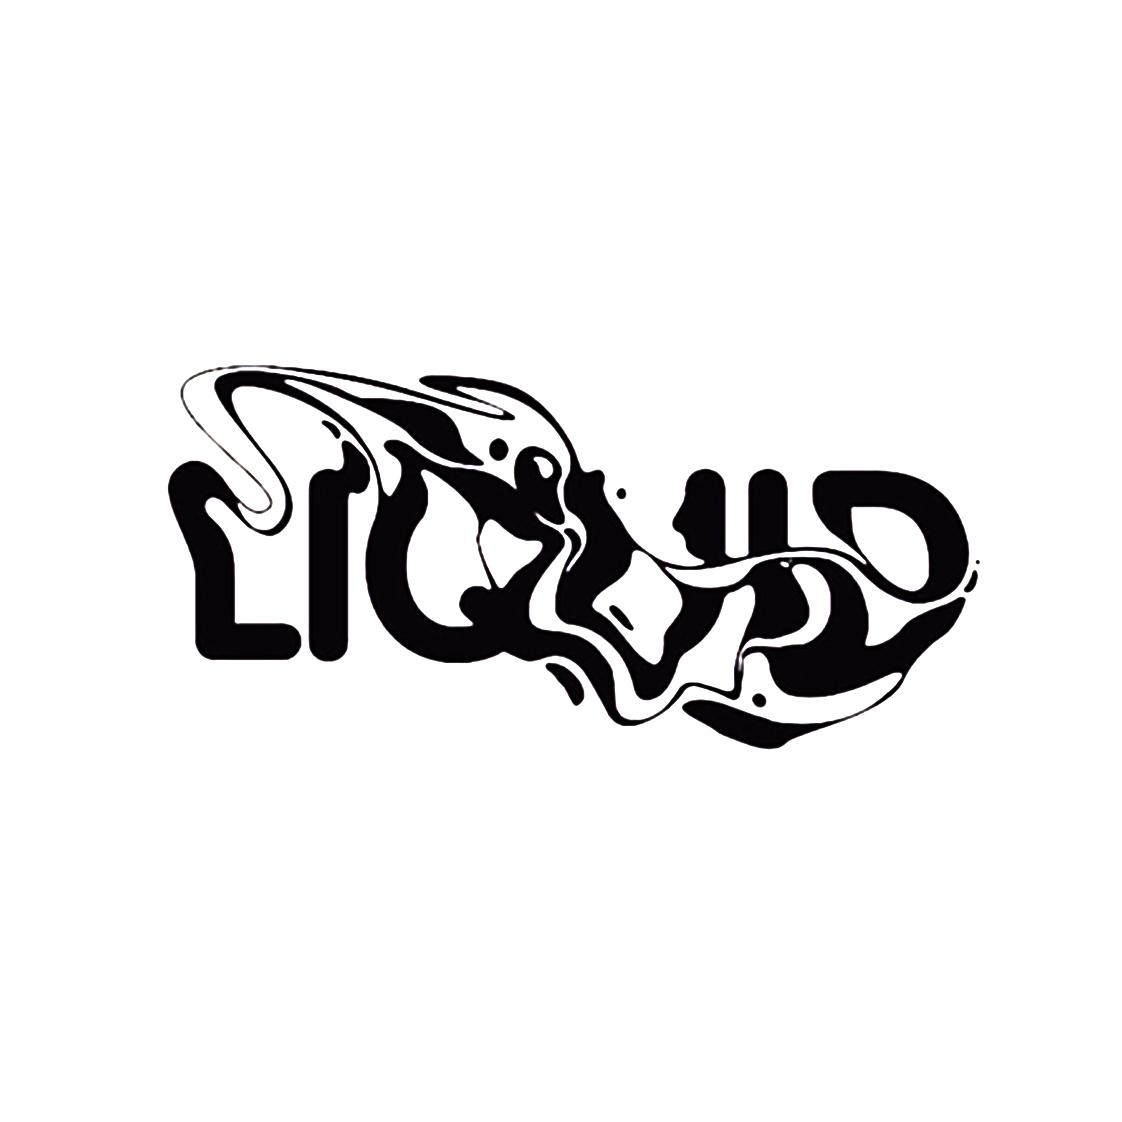 LIQUID外套商标转让费用买卖交易流程